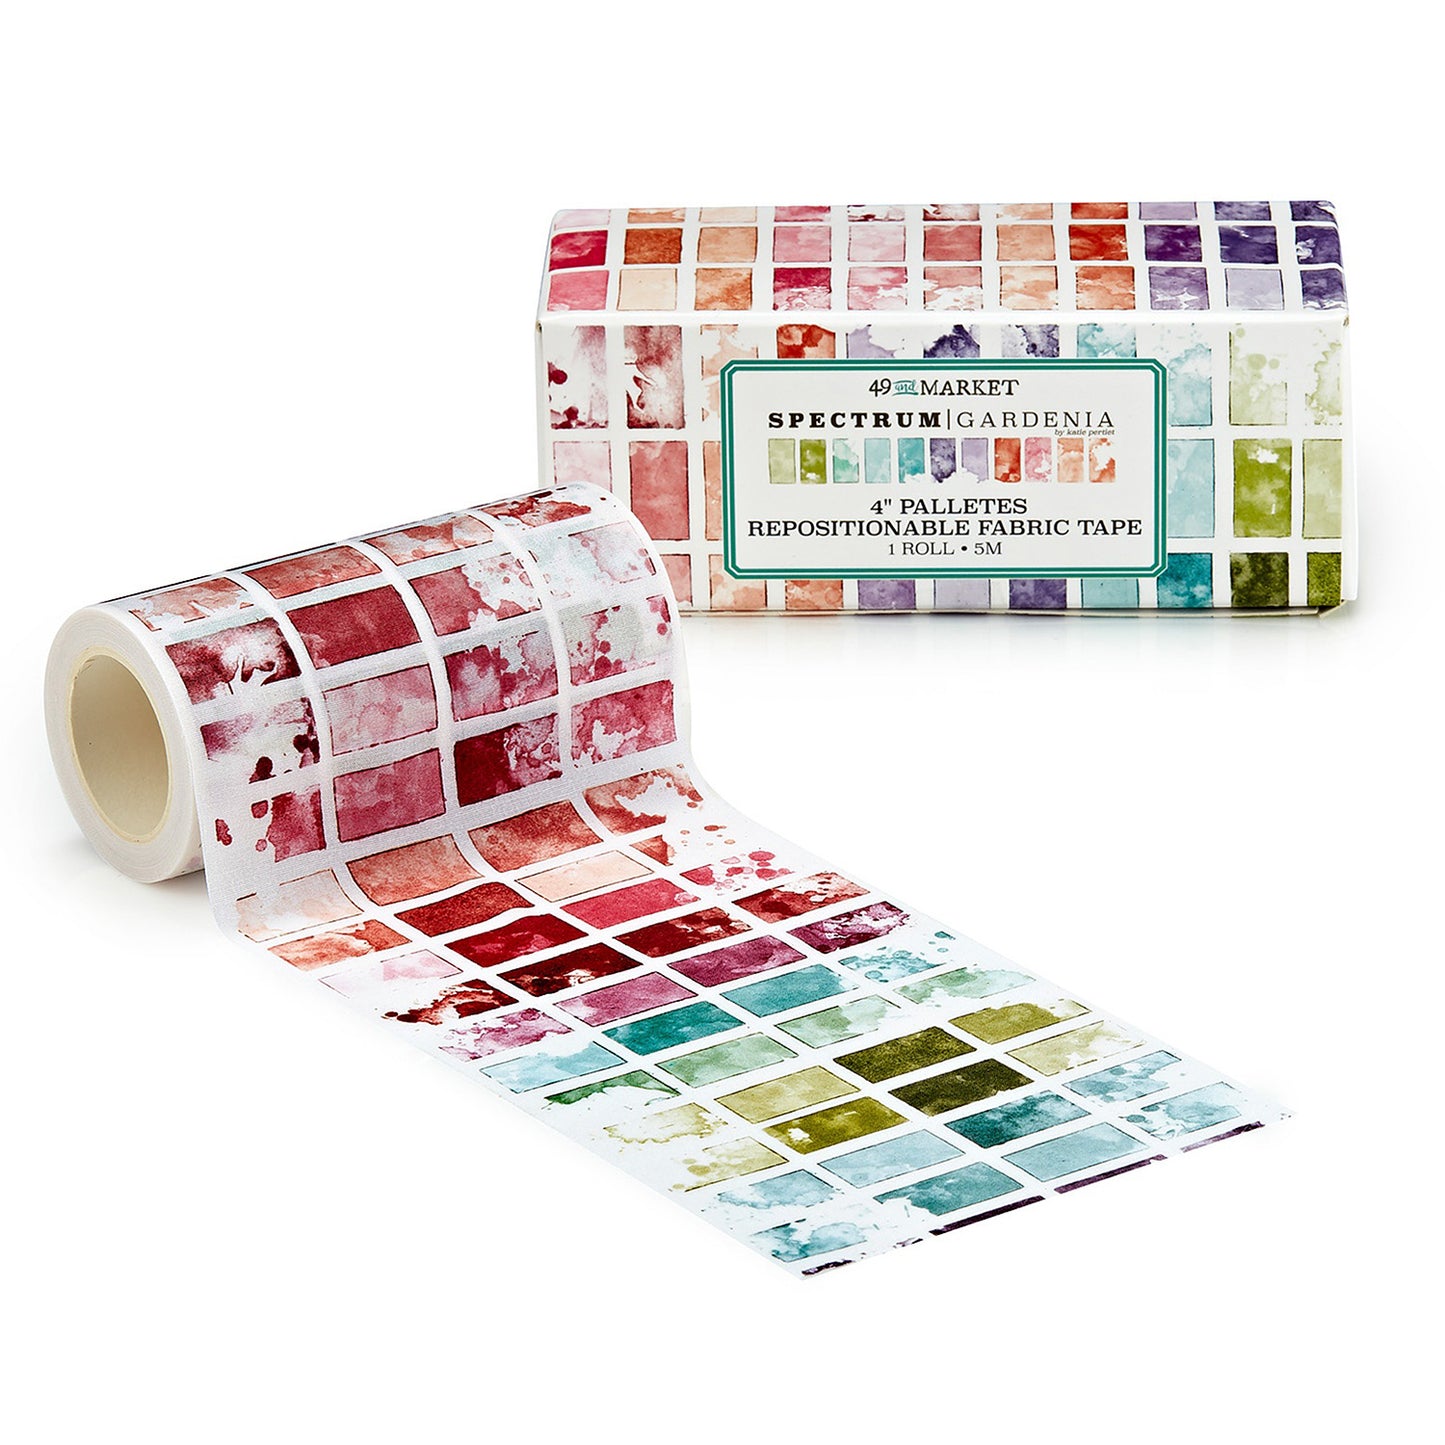 49 and Market - Fabric Tape Box - Spectrum Gardenia Palettes